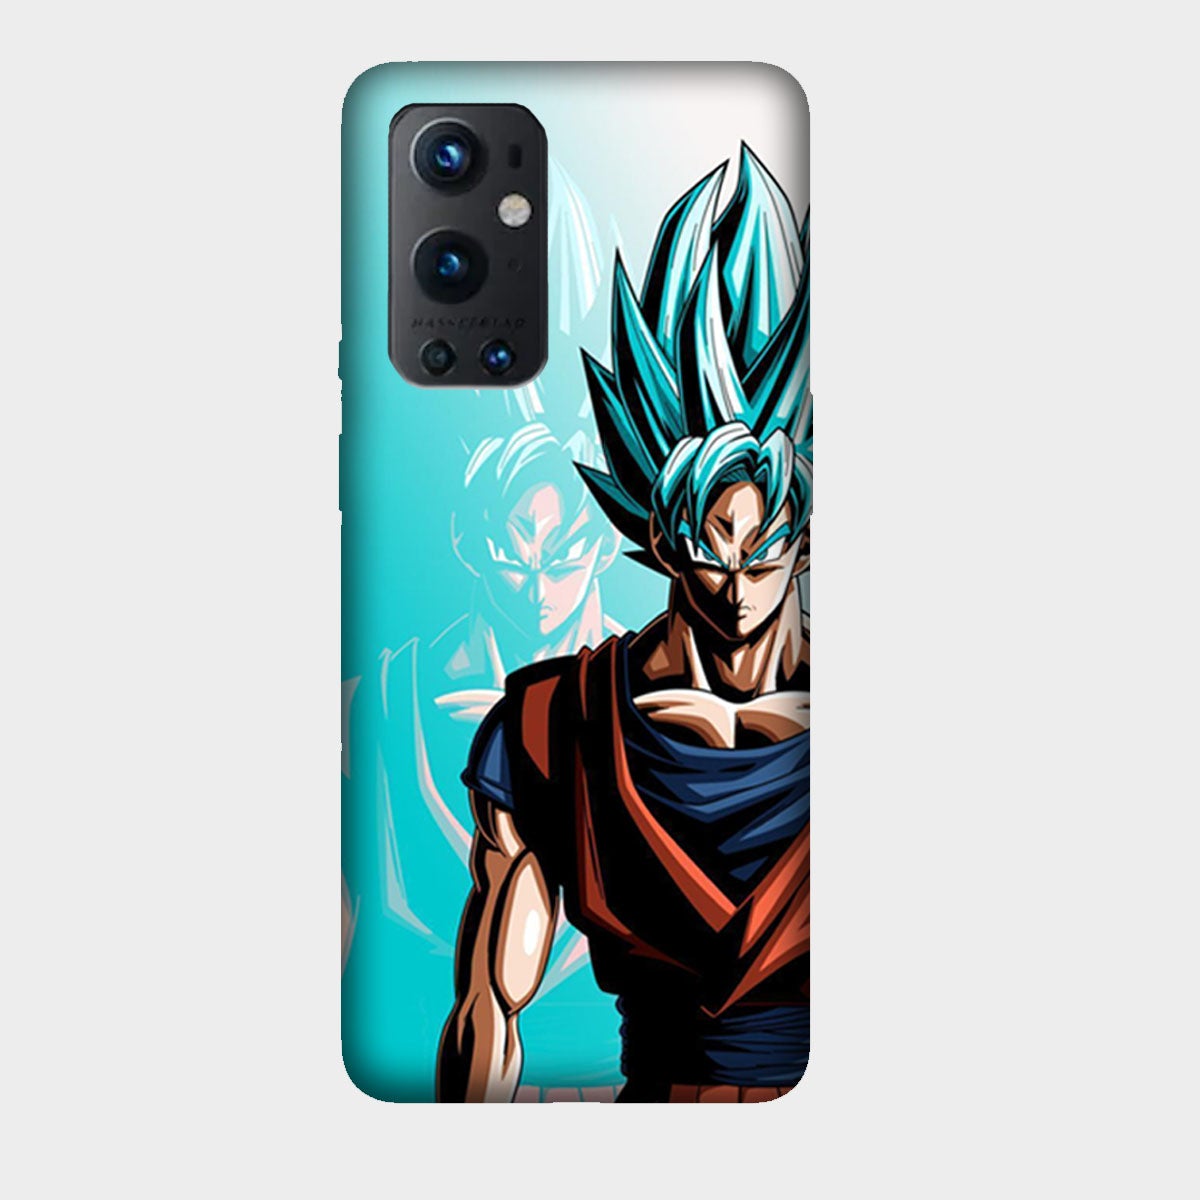 Goku Dragon Ball Z - Mobile Phone Cover - Hard Case - OnePlus